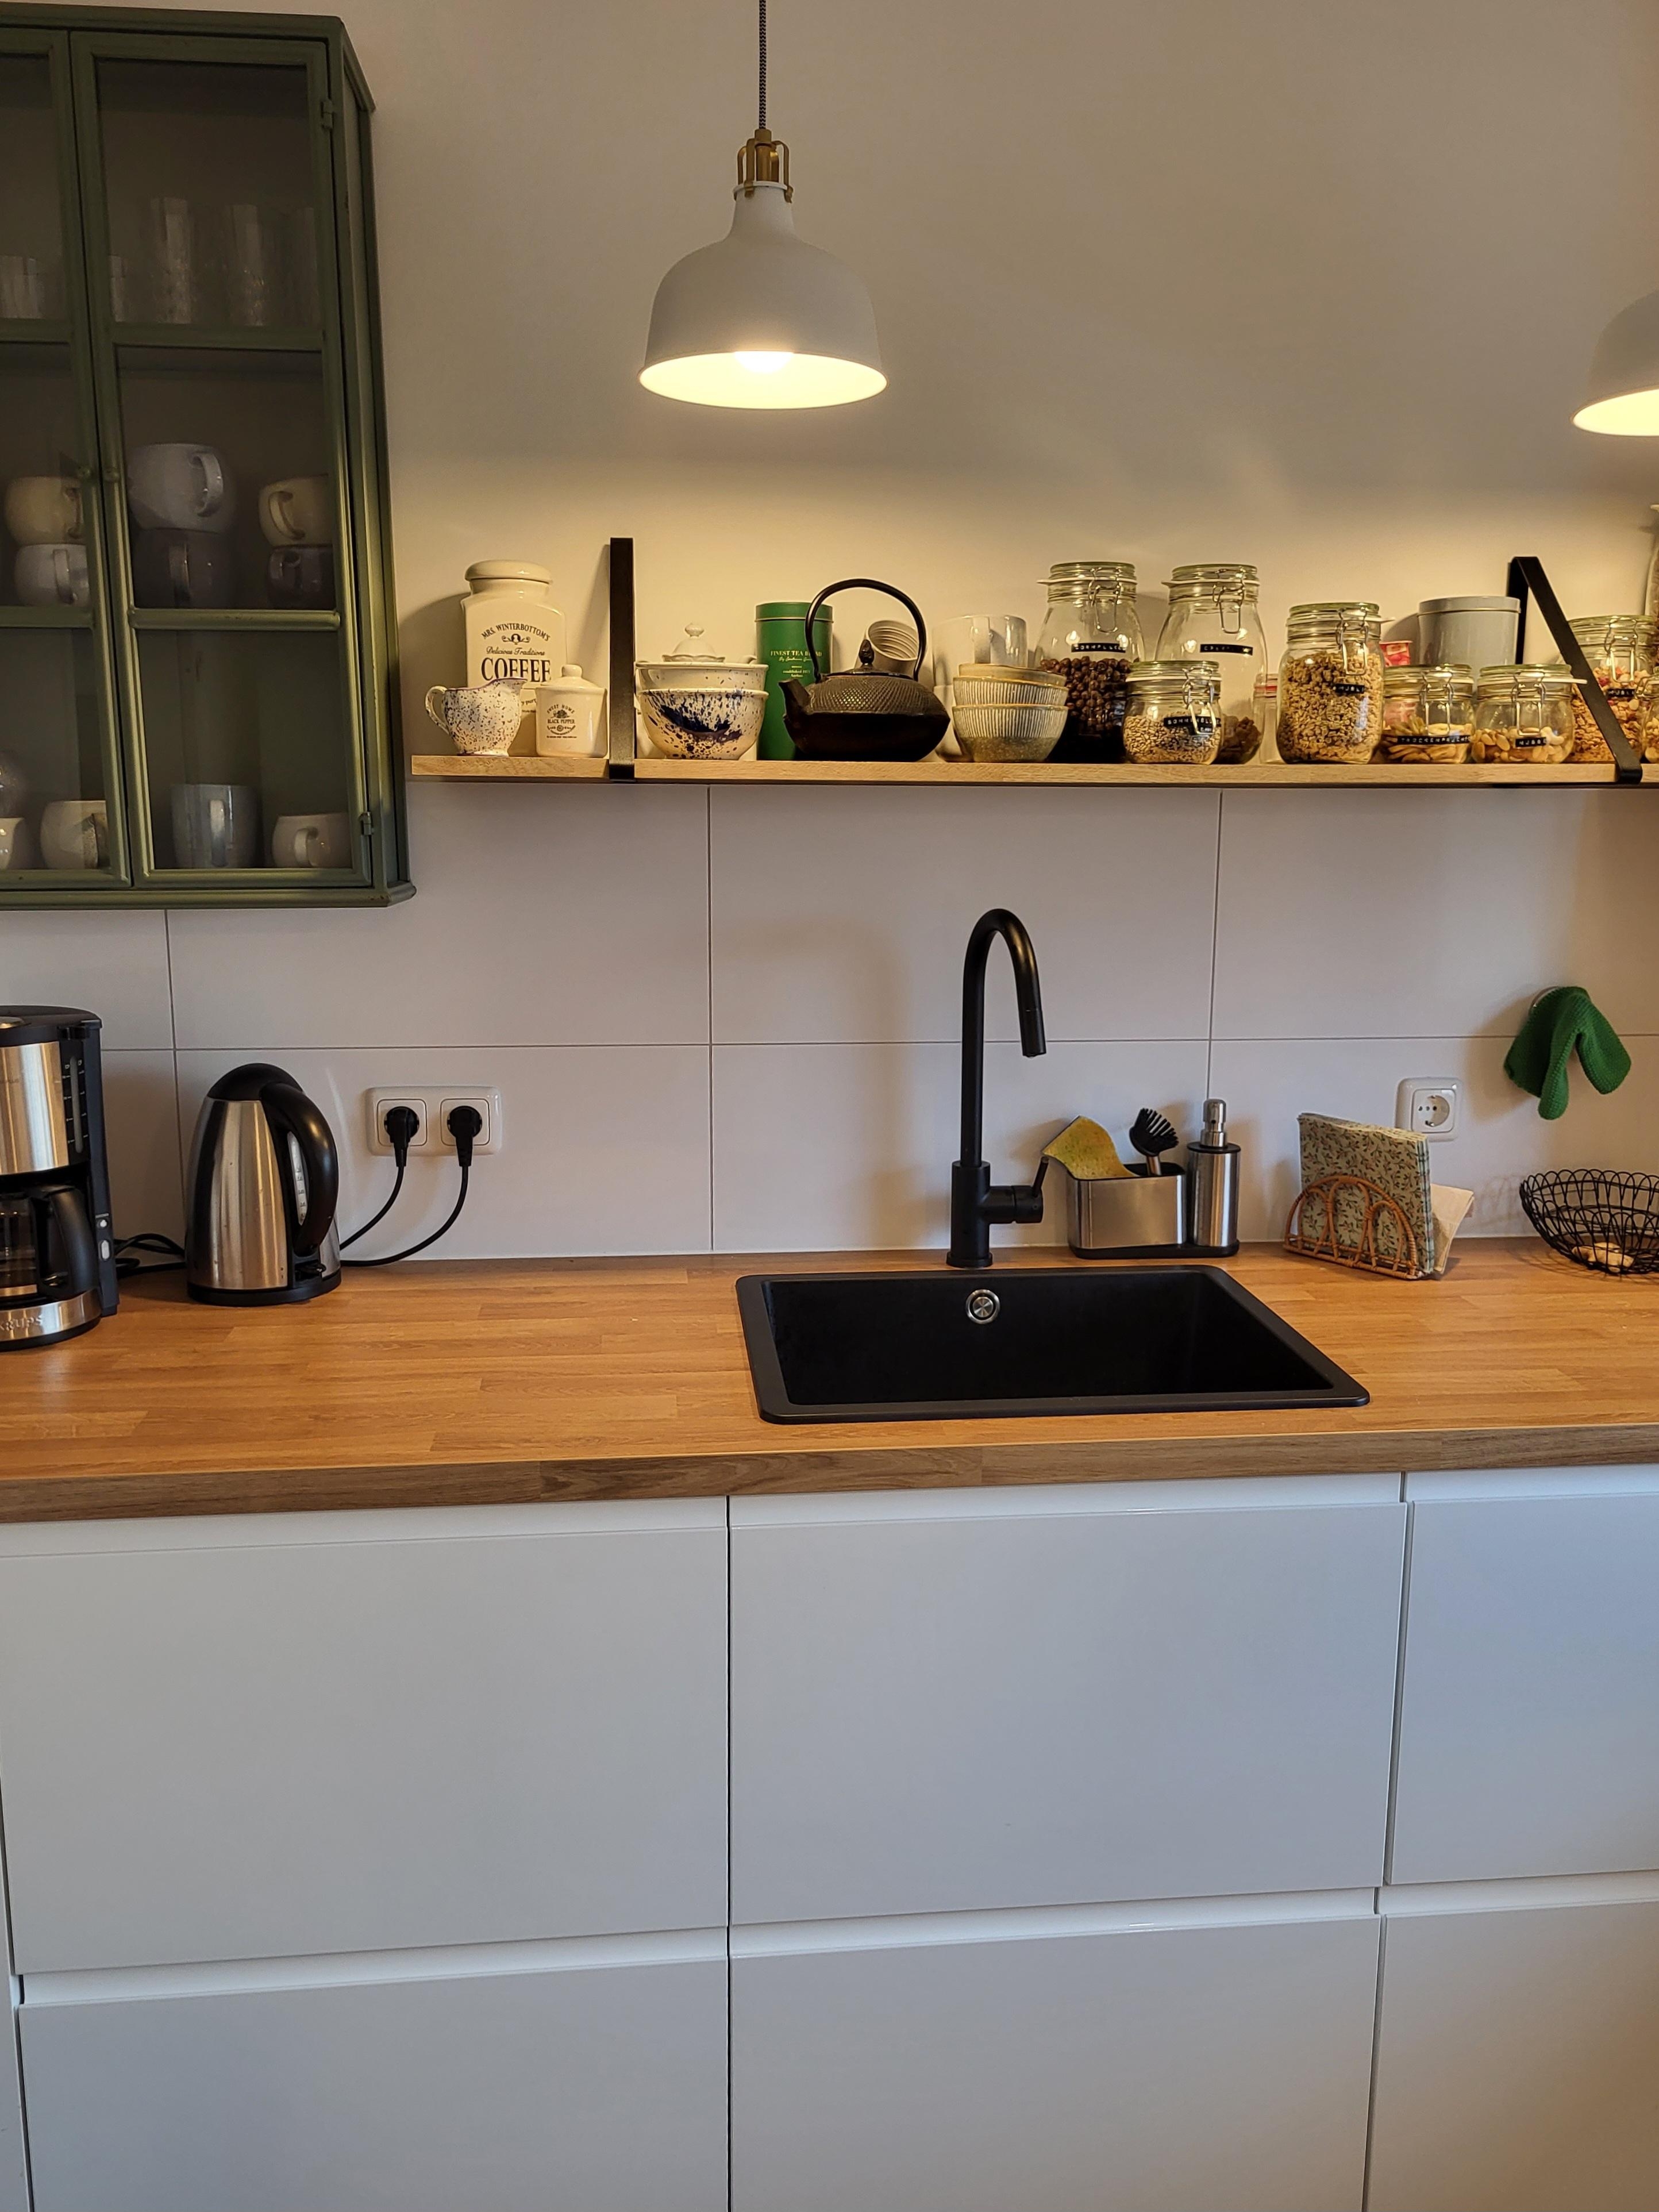 #kitchen #whiteandgreen #cleanliving